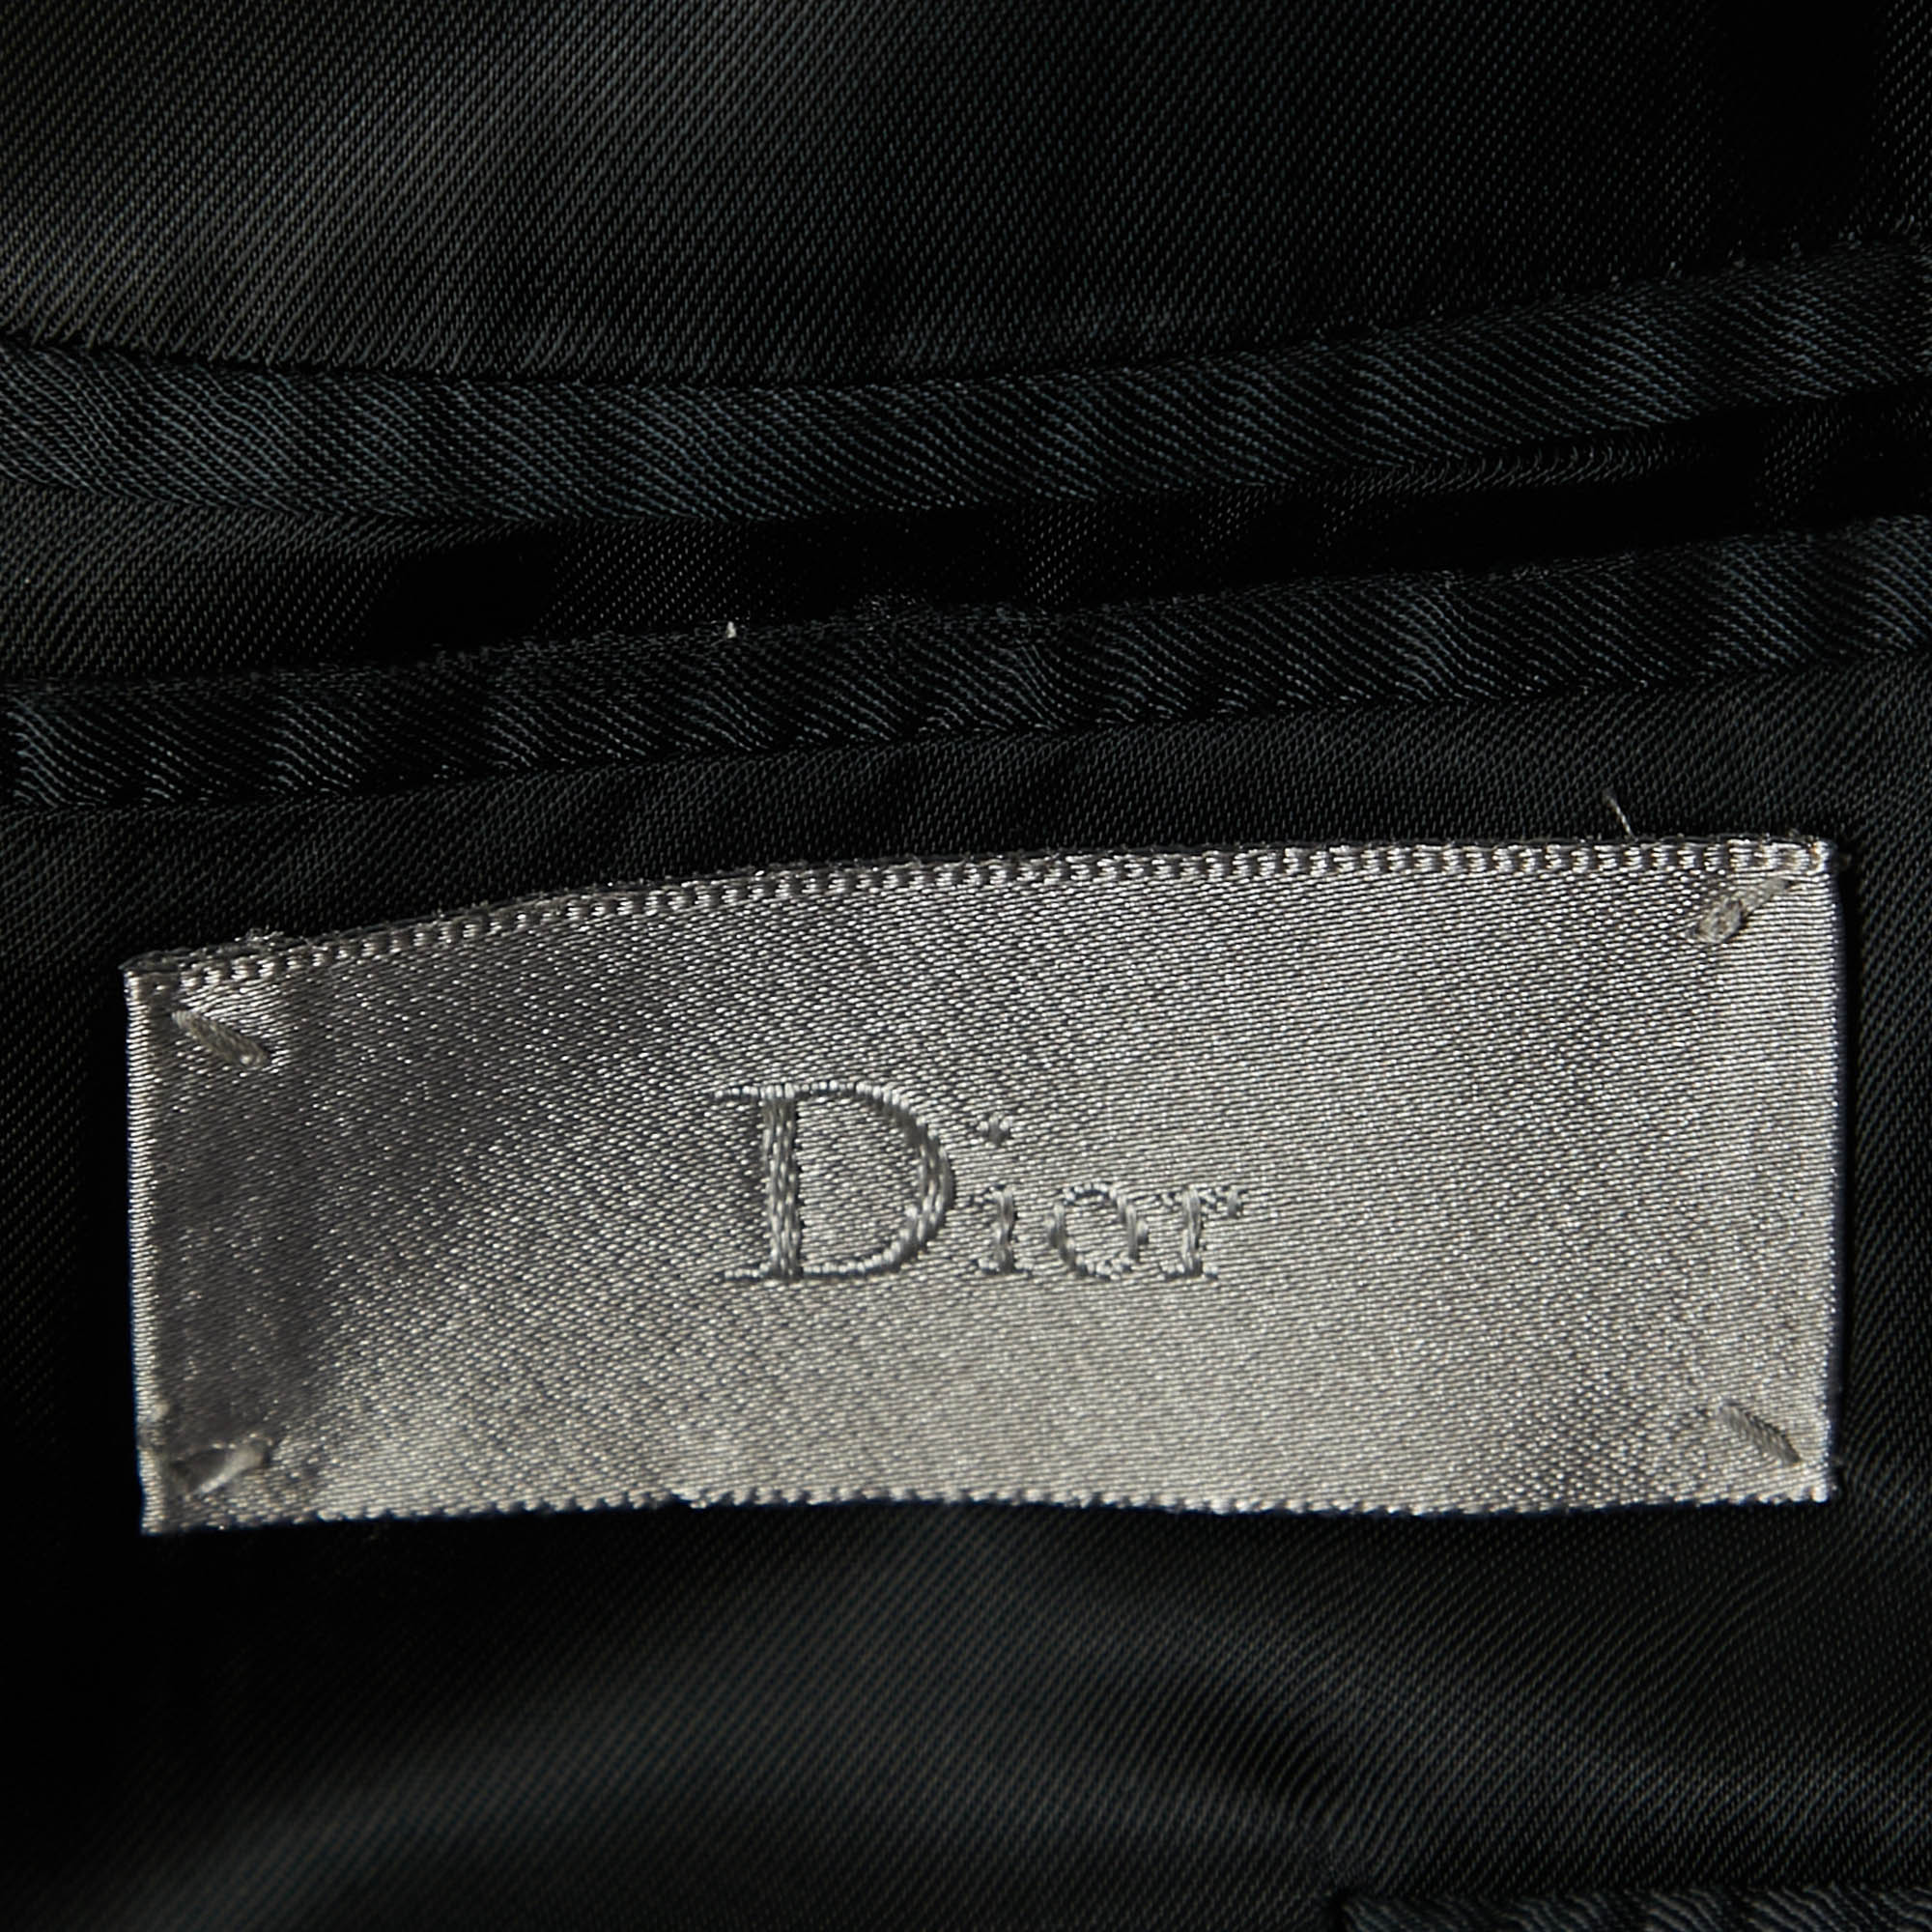 Dior Grey Wool Single-Breasted Jacket S